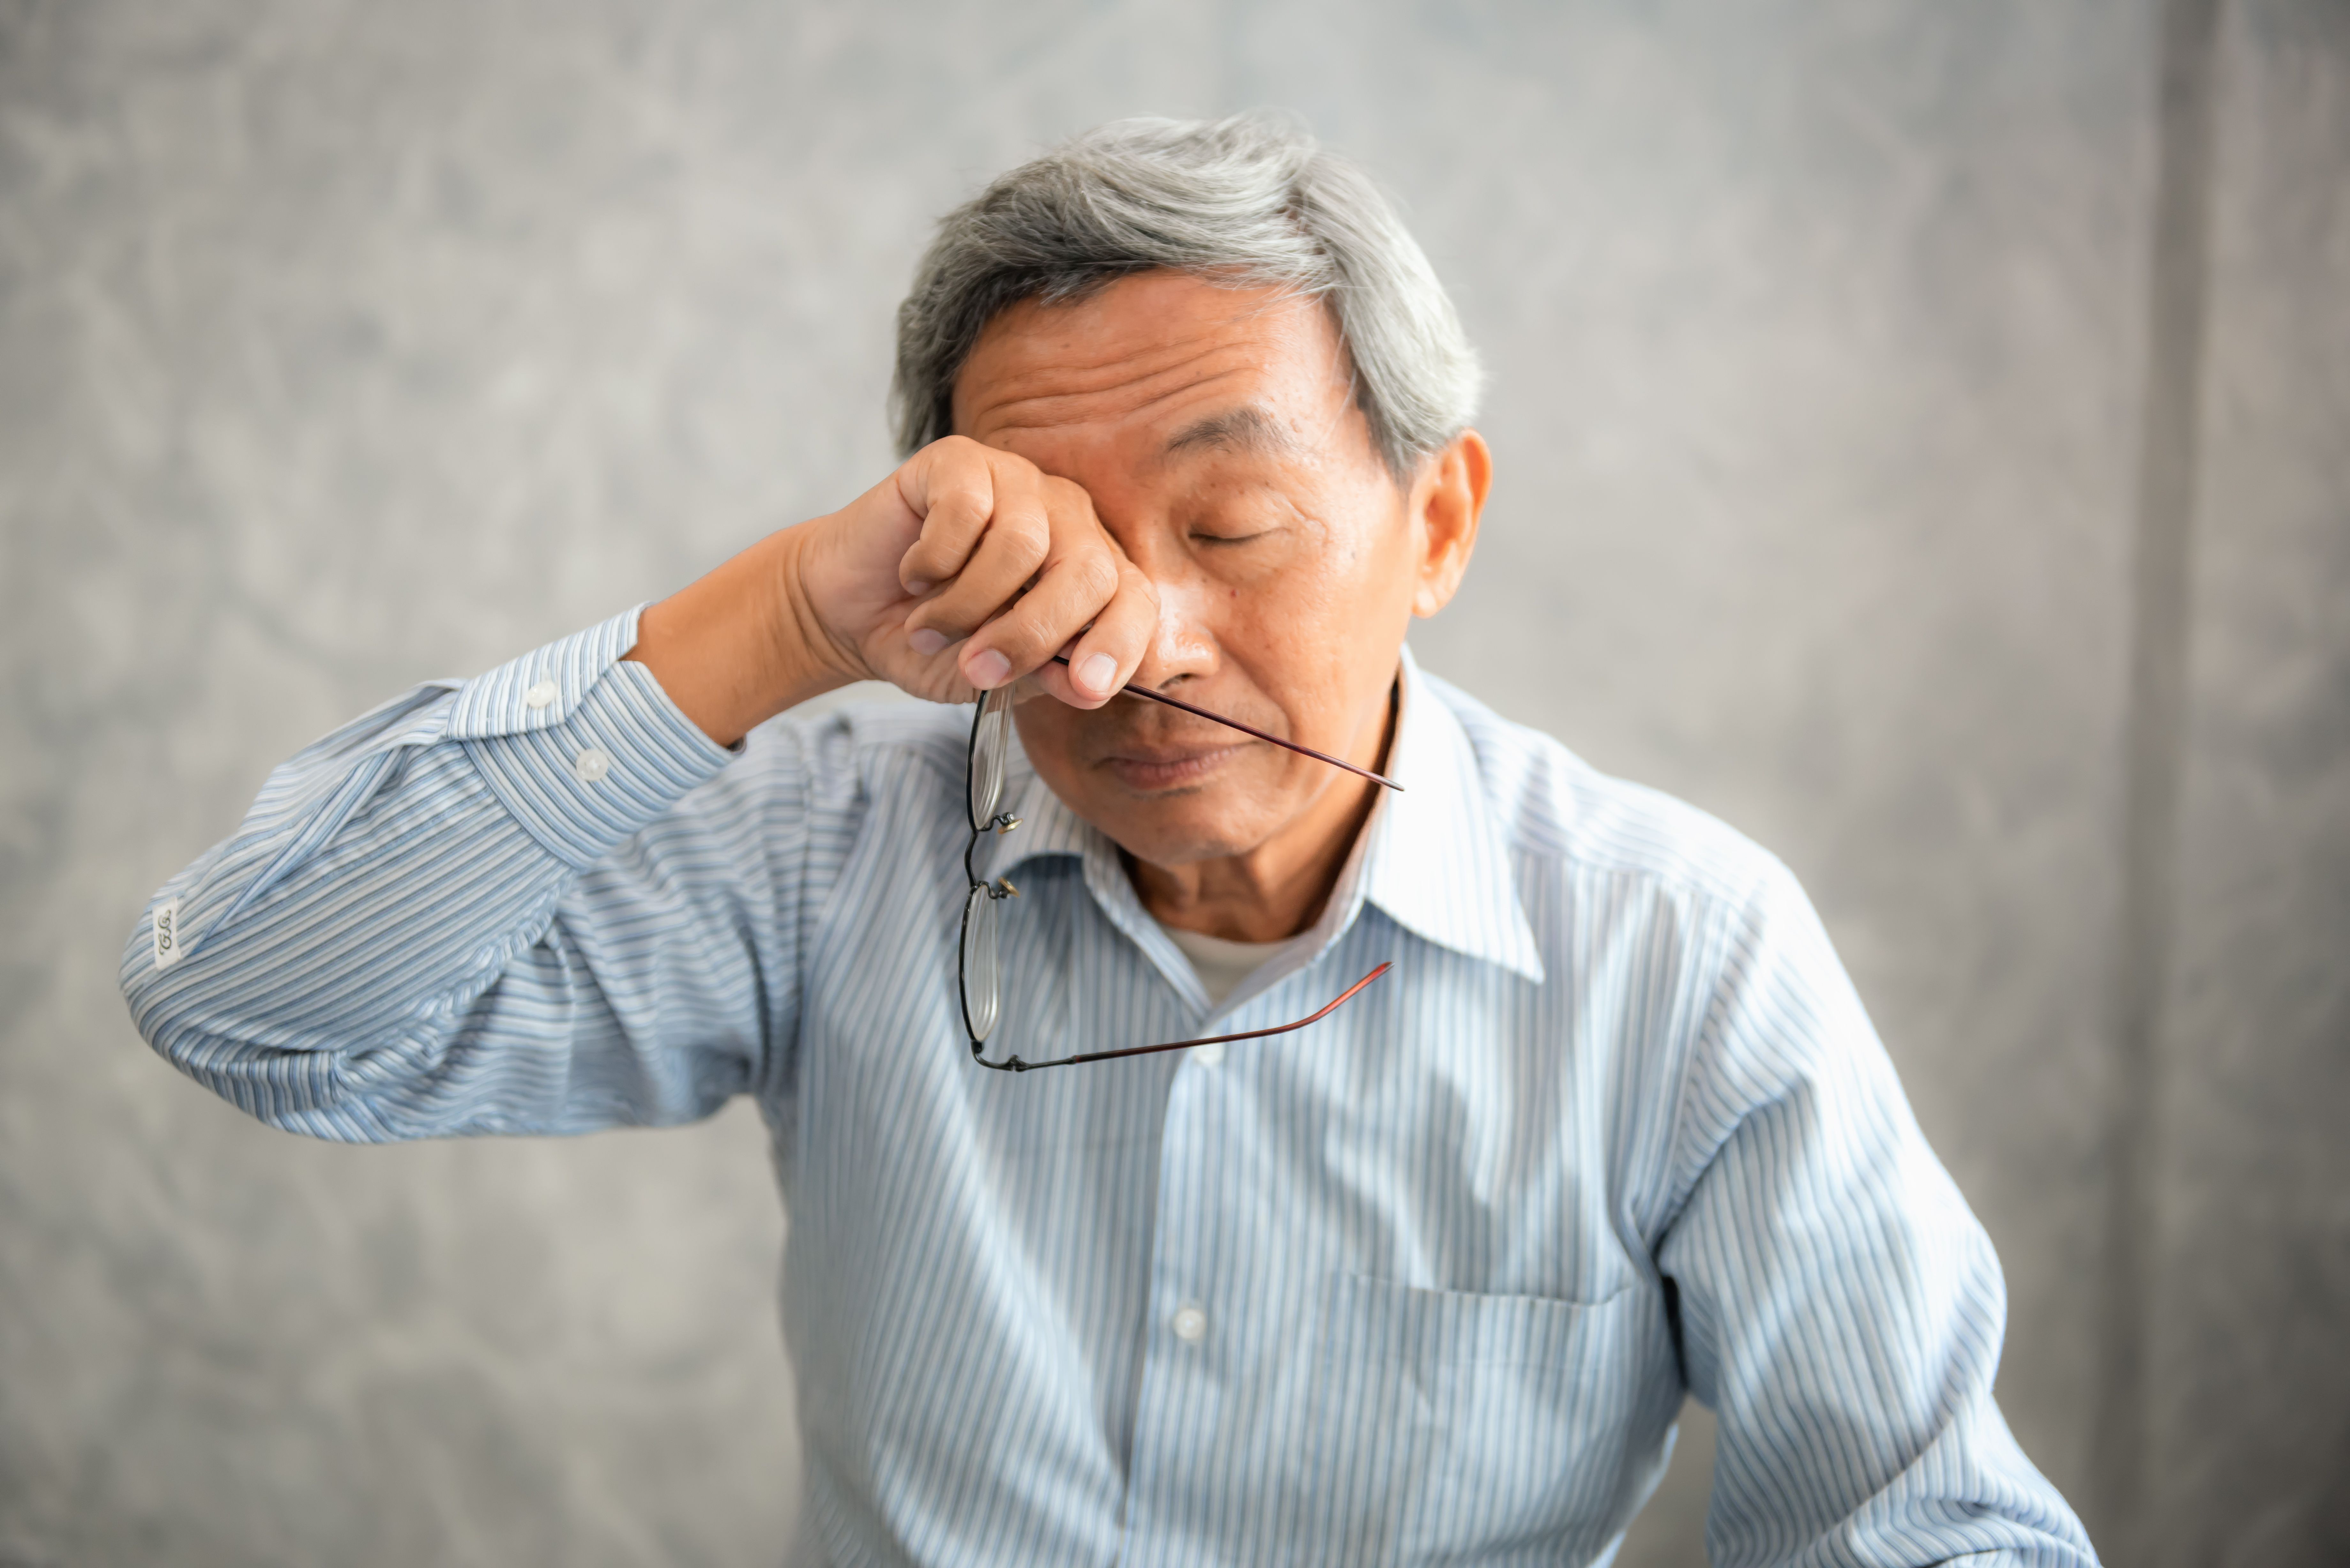 Older man rubbing eyes | Image credit: Maha Heang 245789 - stock.adobe.com